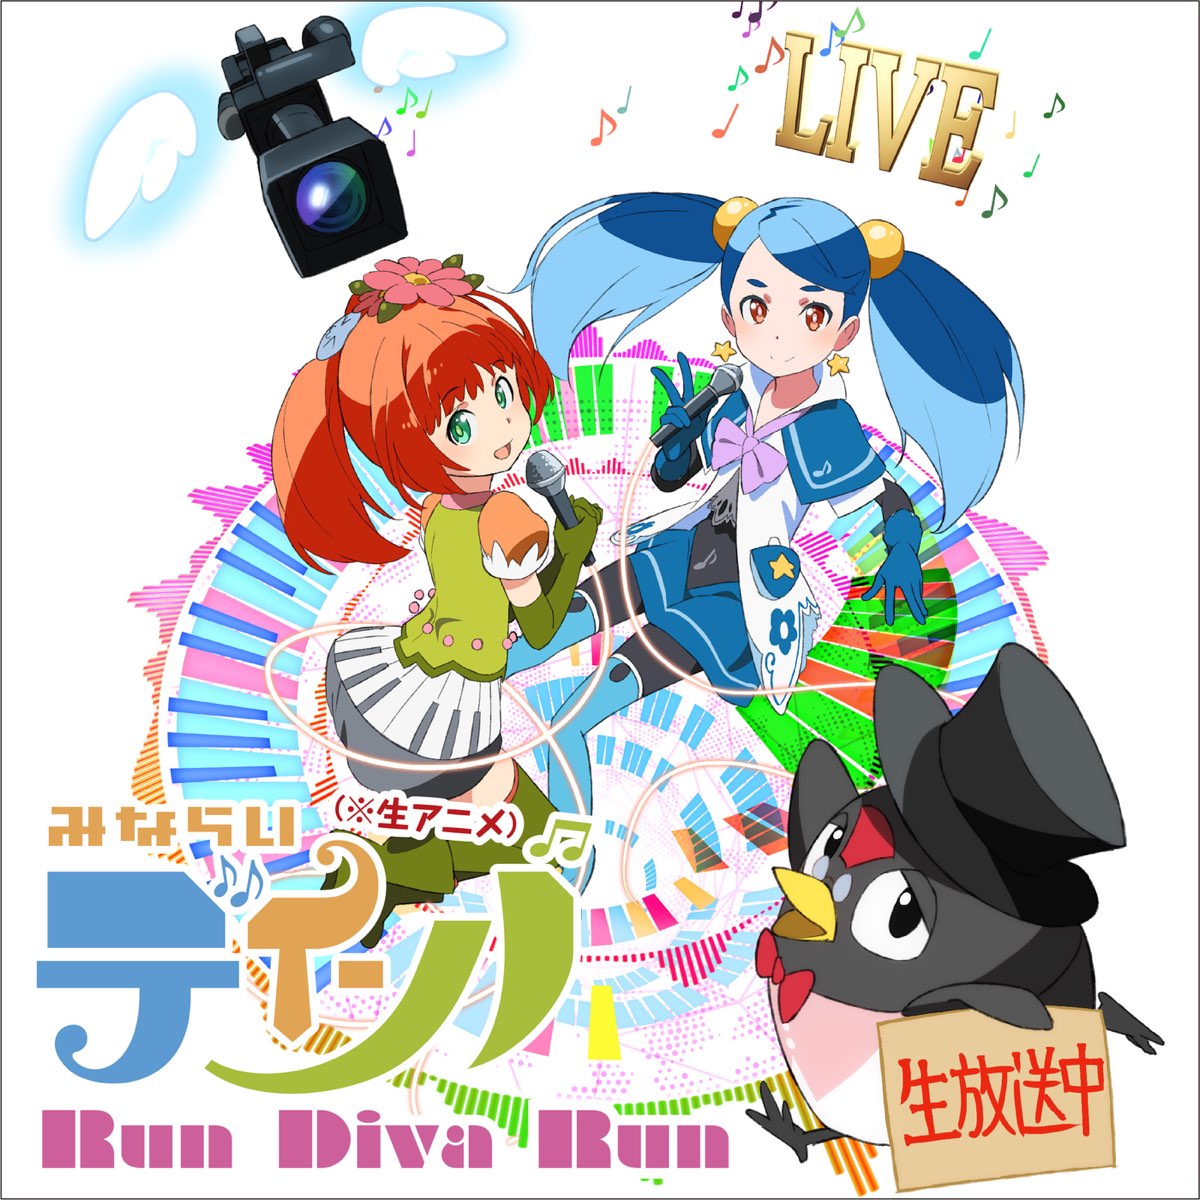 Run Diva Run Anime Size Live Anime Minarai Diva Op Single By Minarai Diva On Apple Music